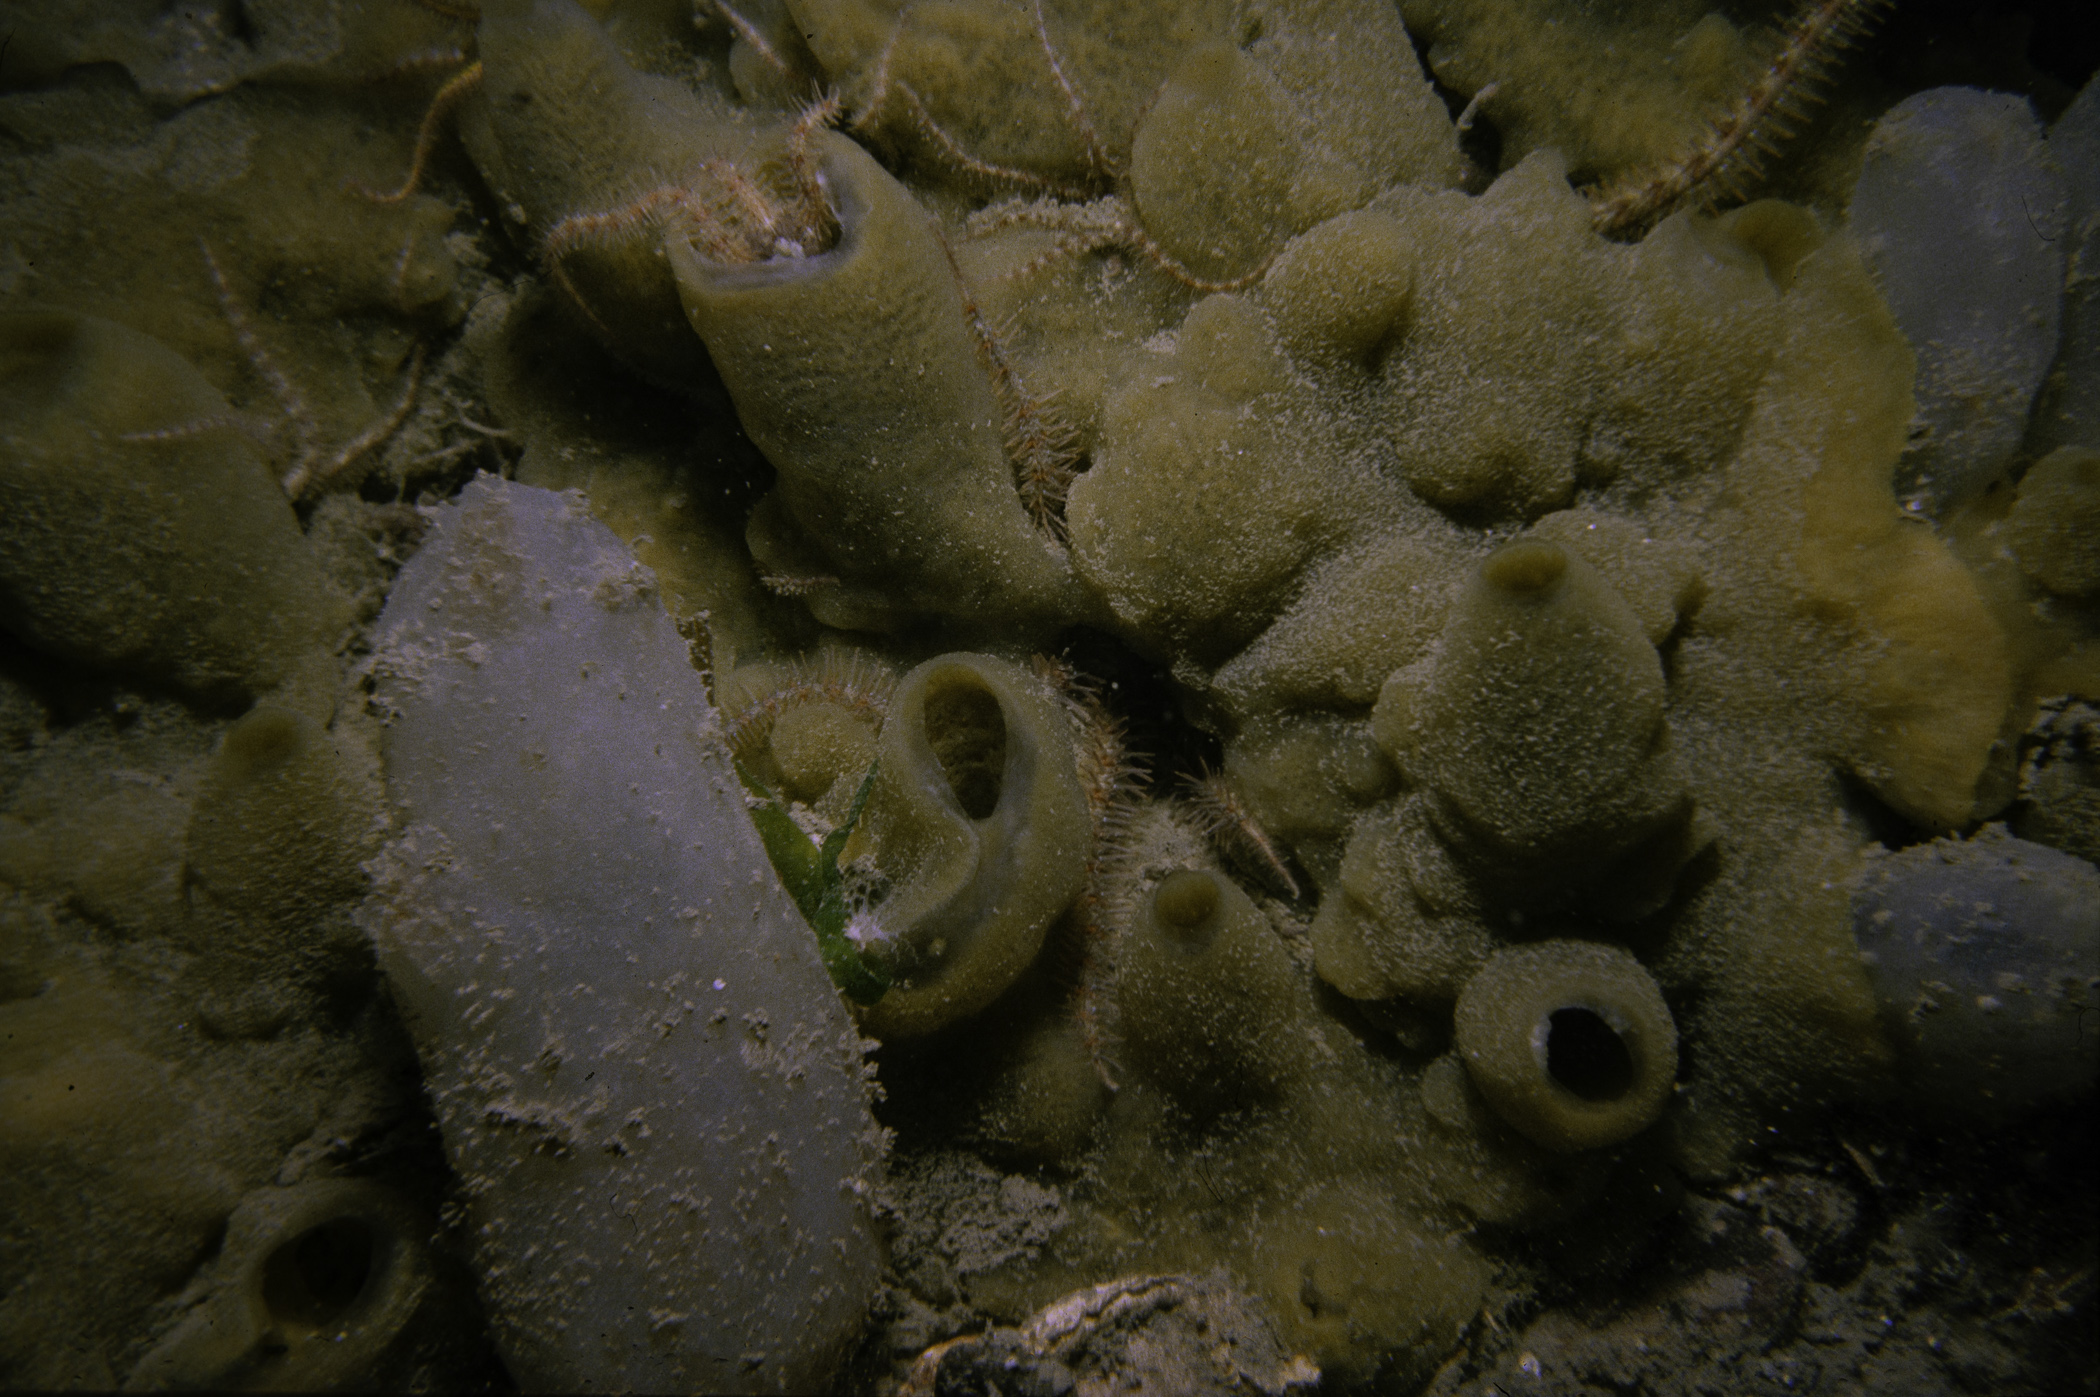 Halichondria panicea, Ophiothrix fragilis, Ascidiella aspersa. Site: Marlfield Bay, Strangford Lough. 